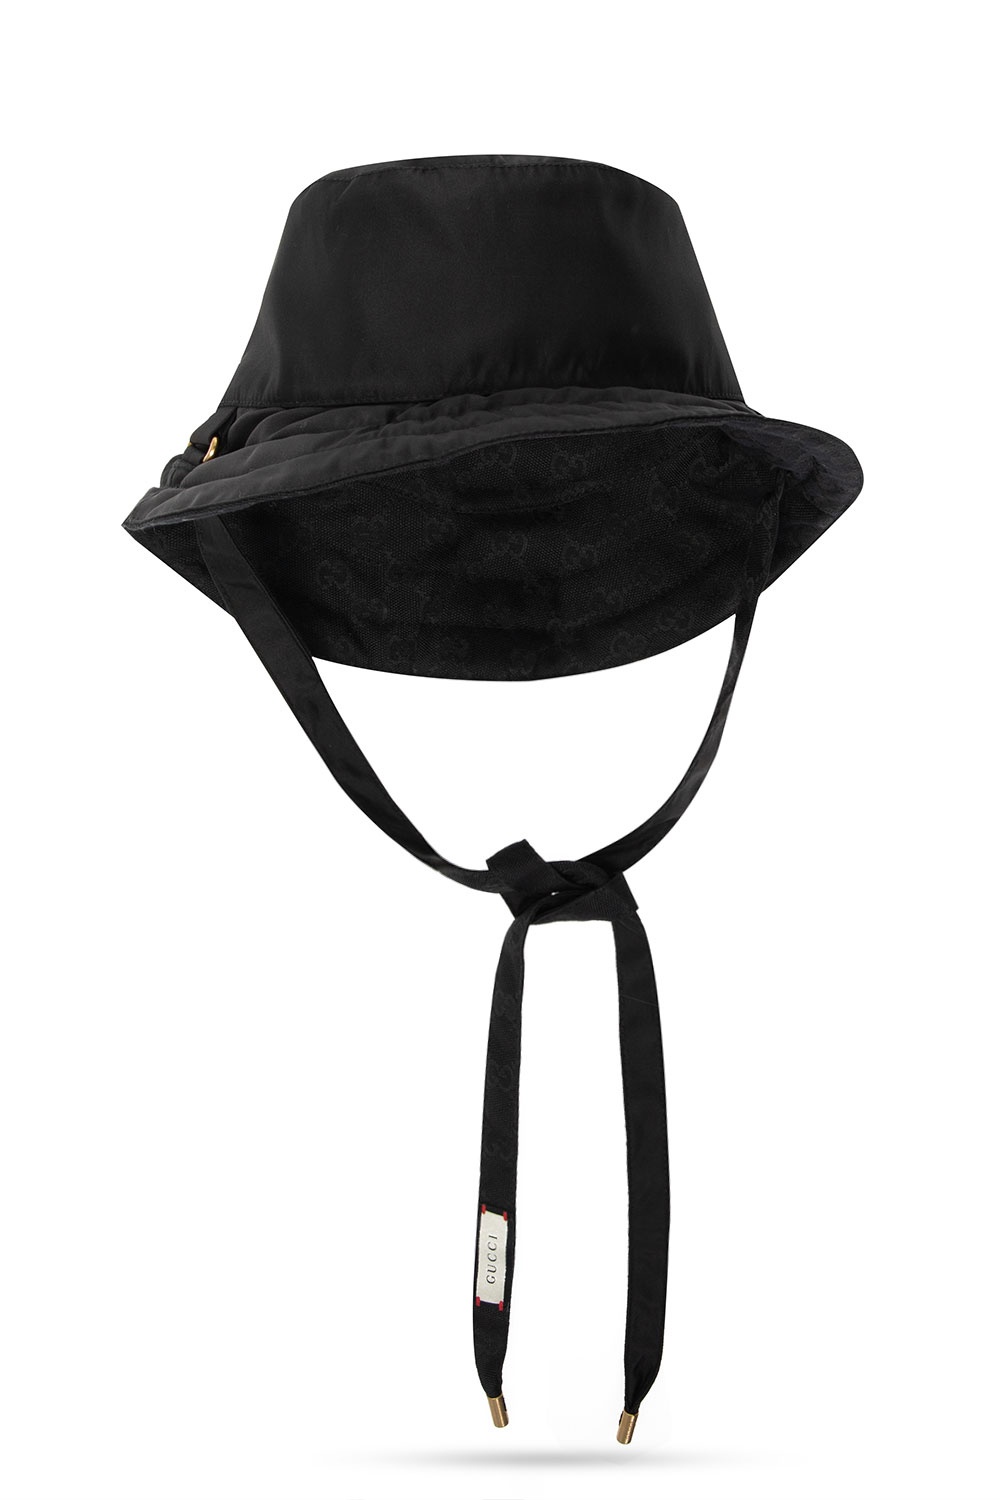 IetpShops classic flexfit logo Black - dad twill Gucci Nicaragua low Bucket cotton hat profile - cap with